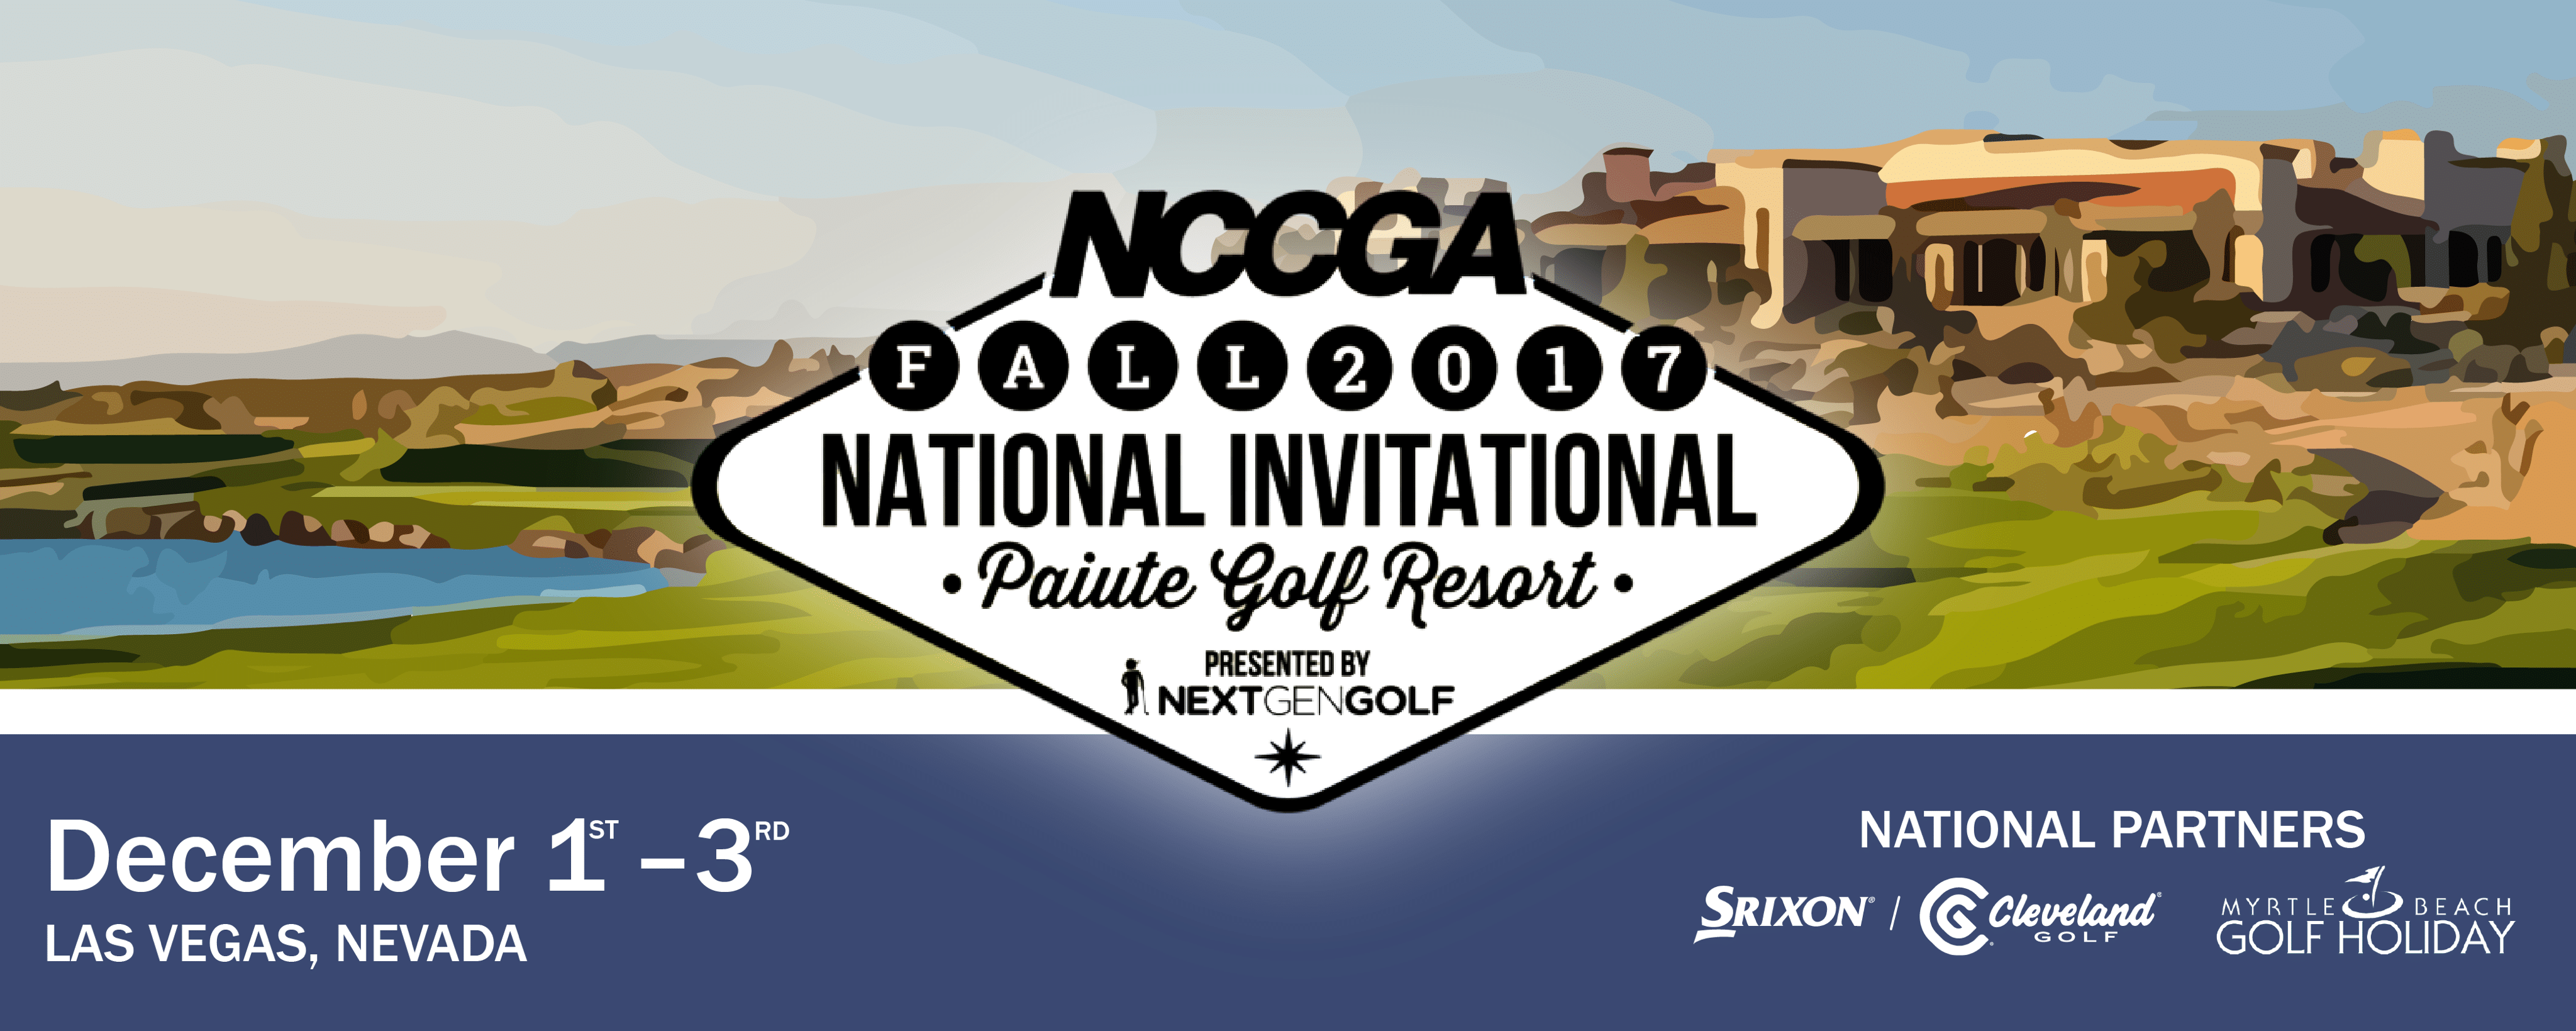 Fall 2017 NCCGA National Invitational Tournament